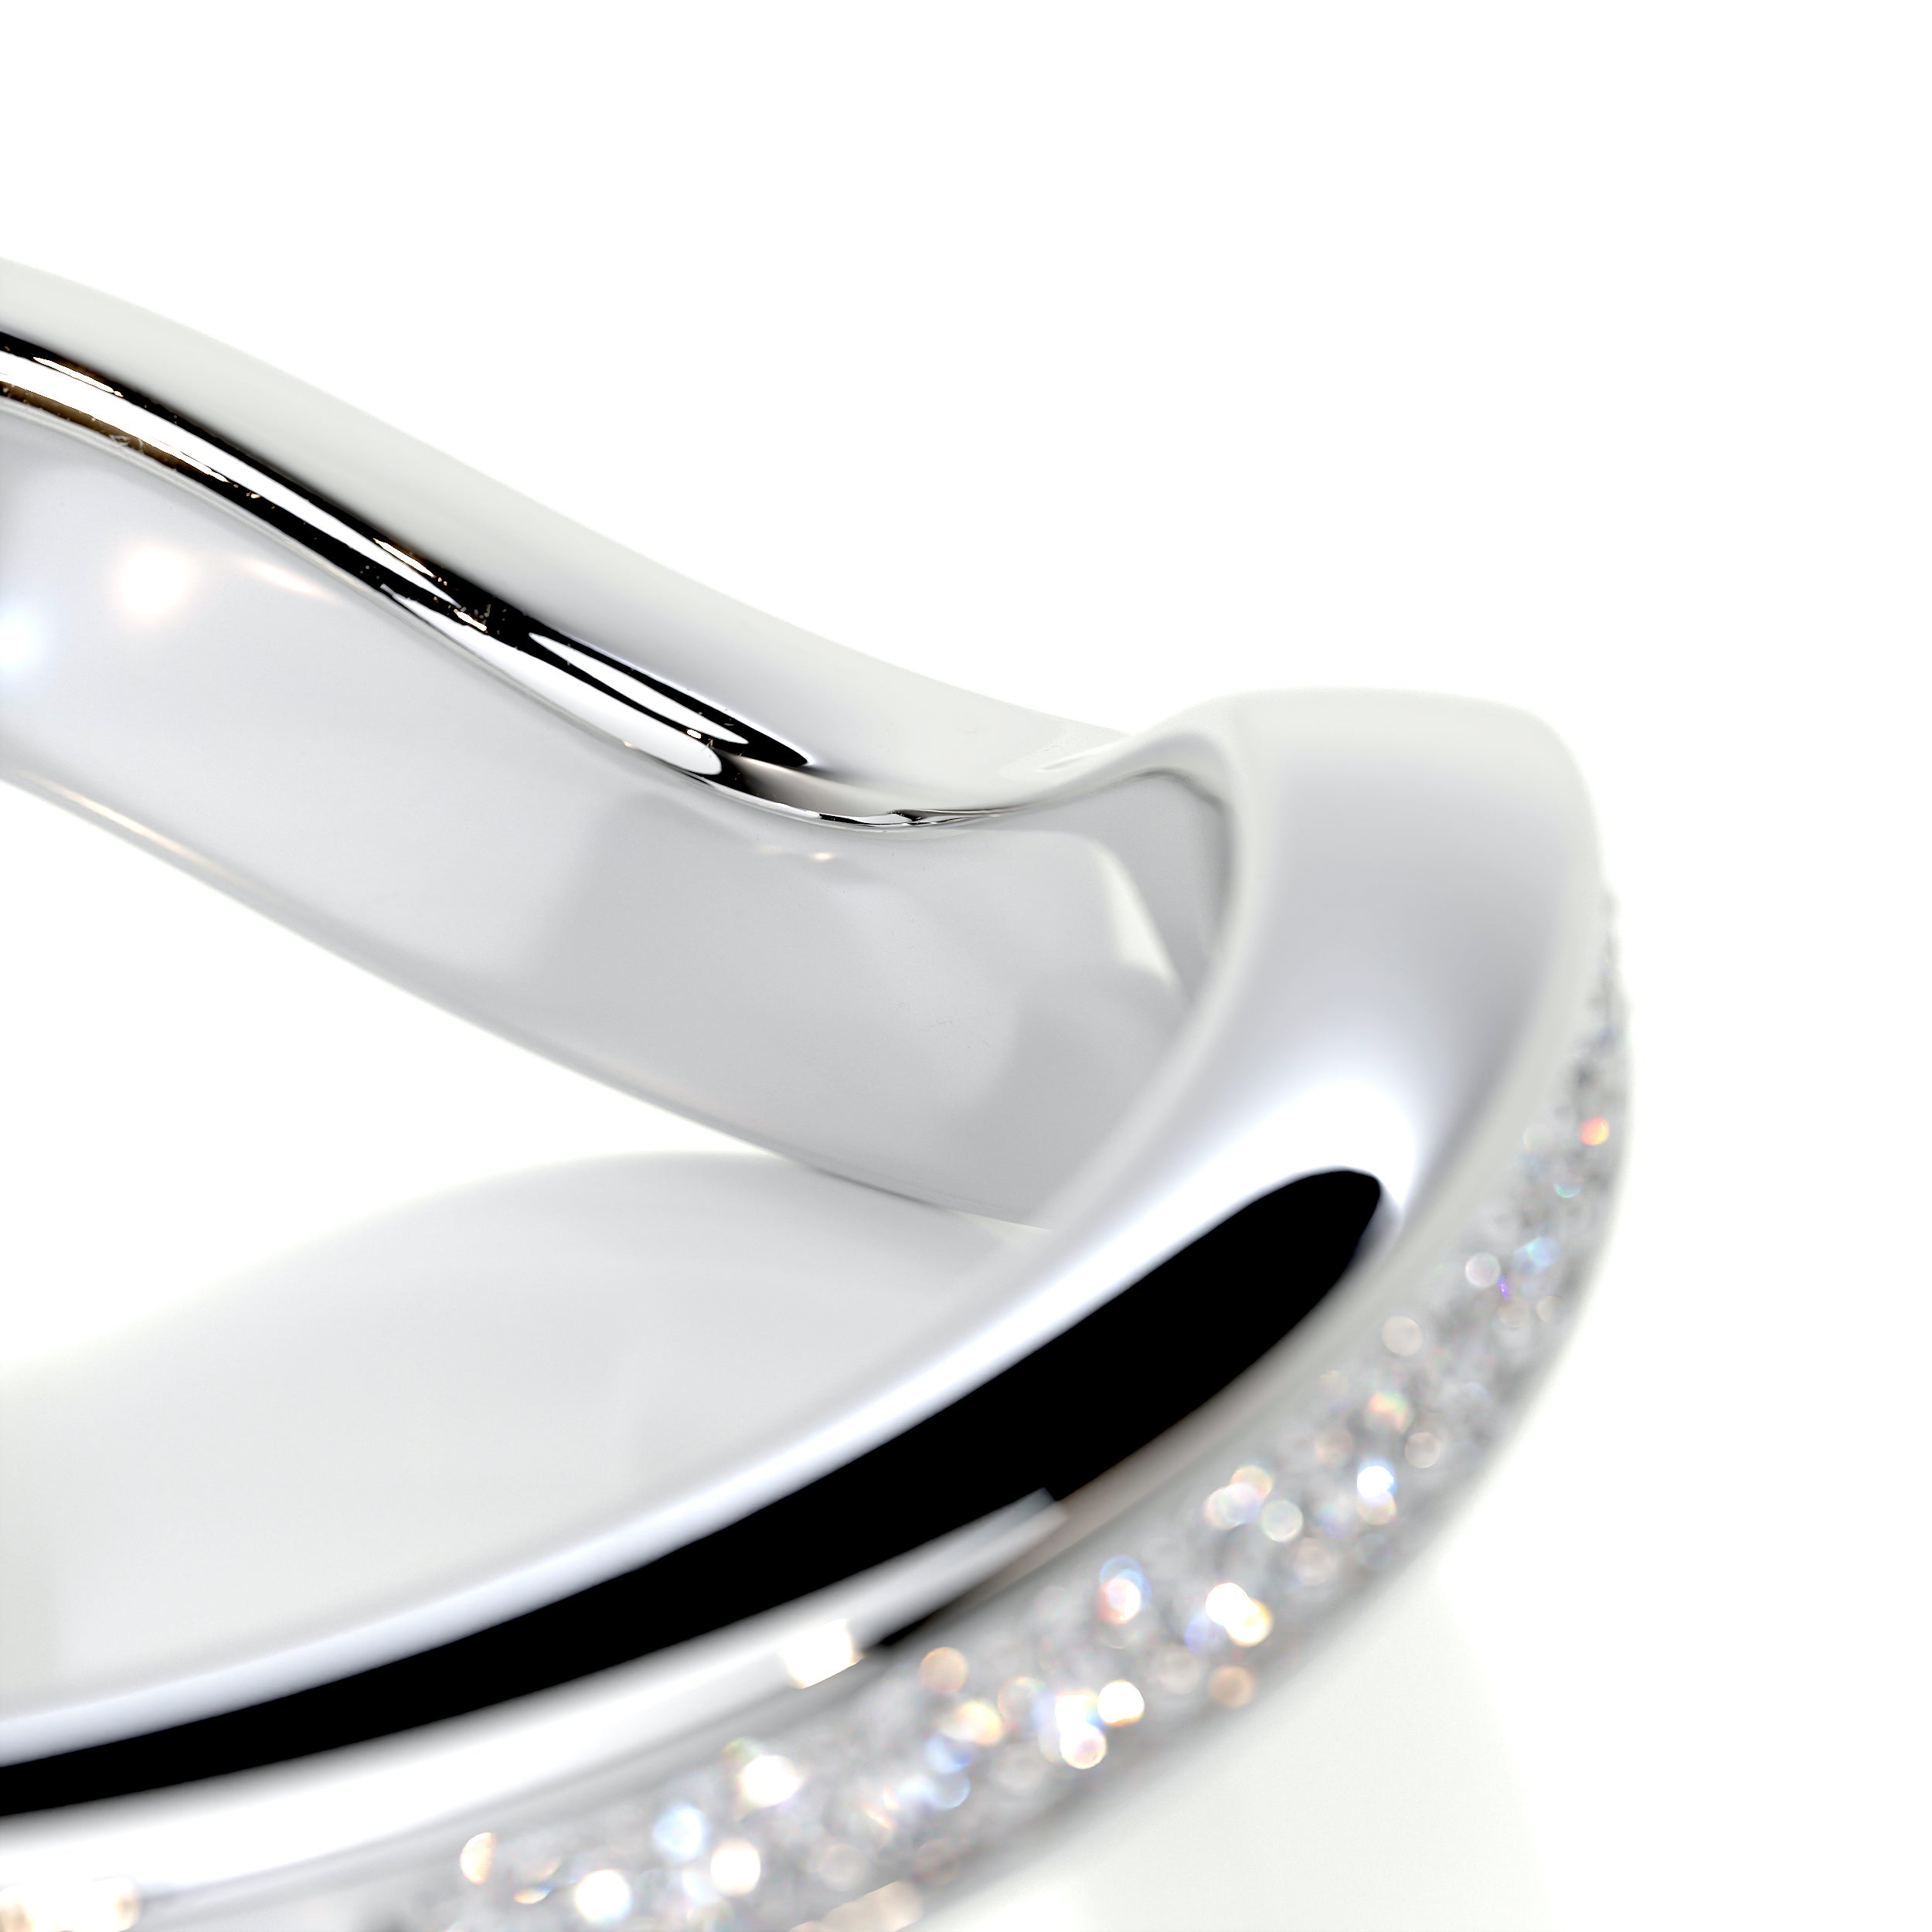 Lucy Diamond Wedding Ring   (0.30 Carat) -14K White Gold